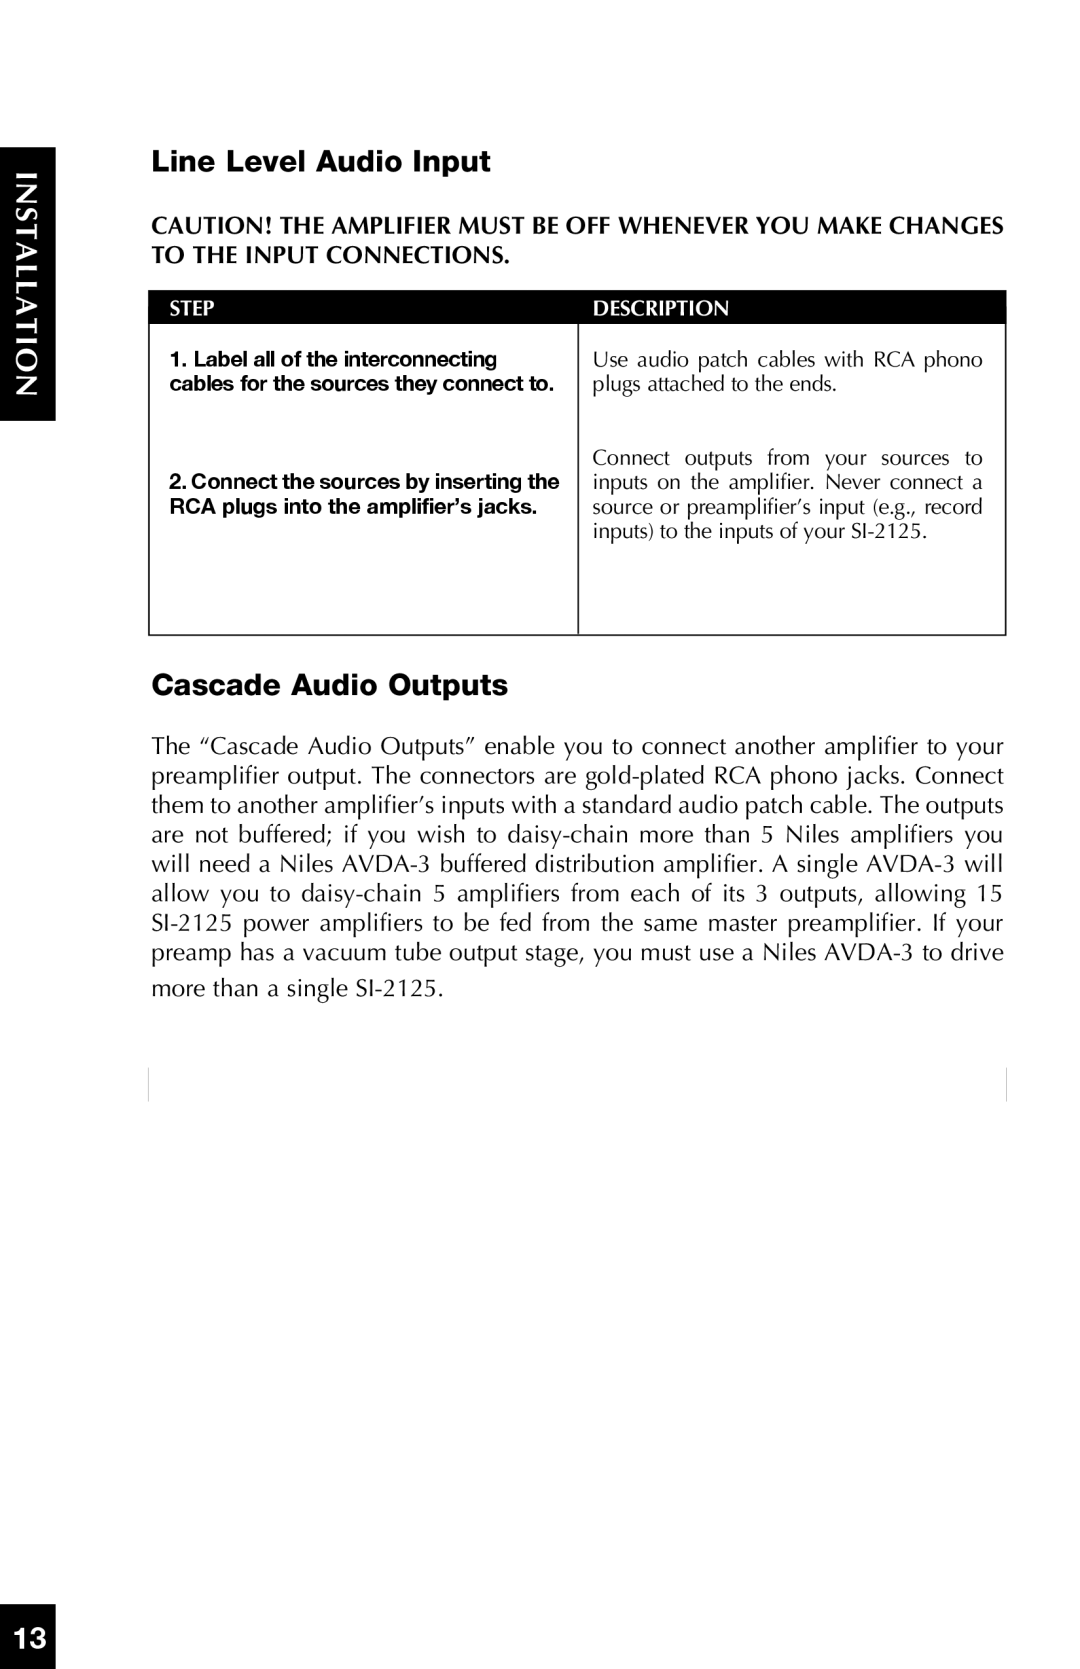 Niles Audio SI-2125 manual Line Level Audio Input, Cascade Audio Outputs, Installation, Step, Description 